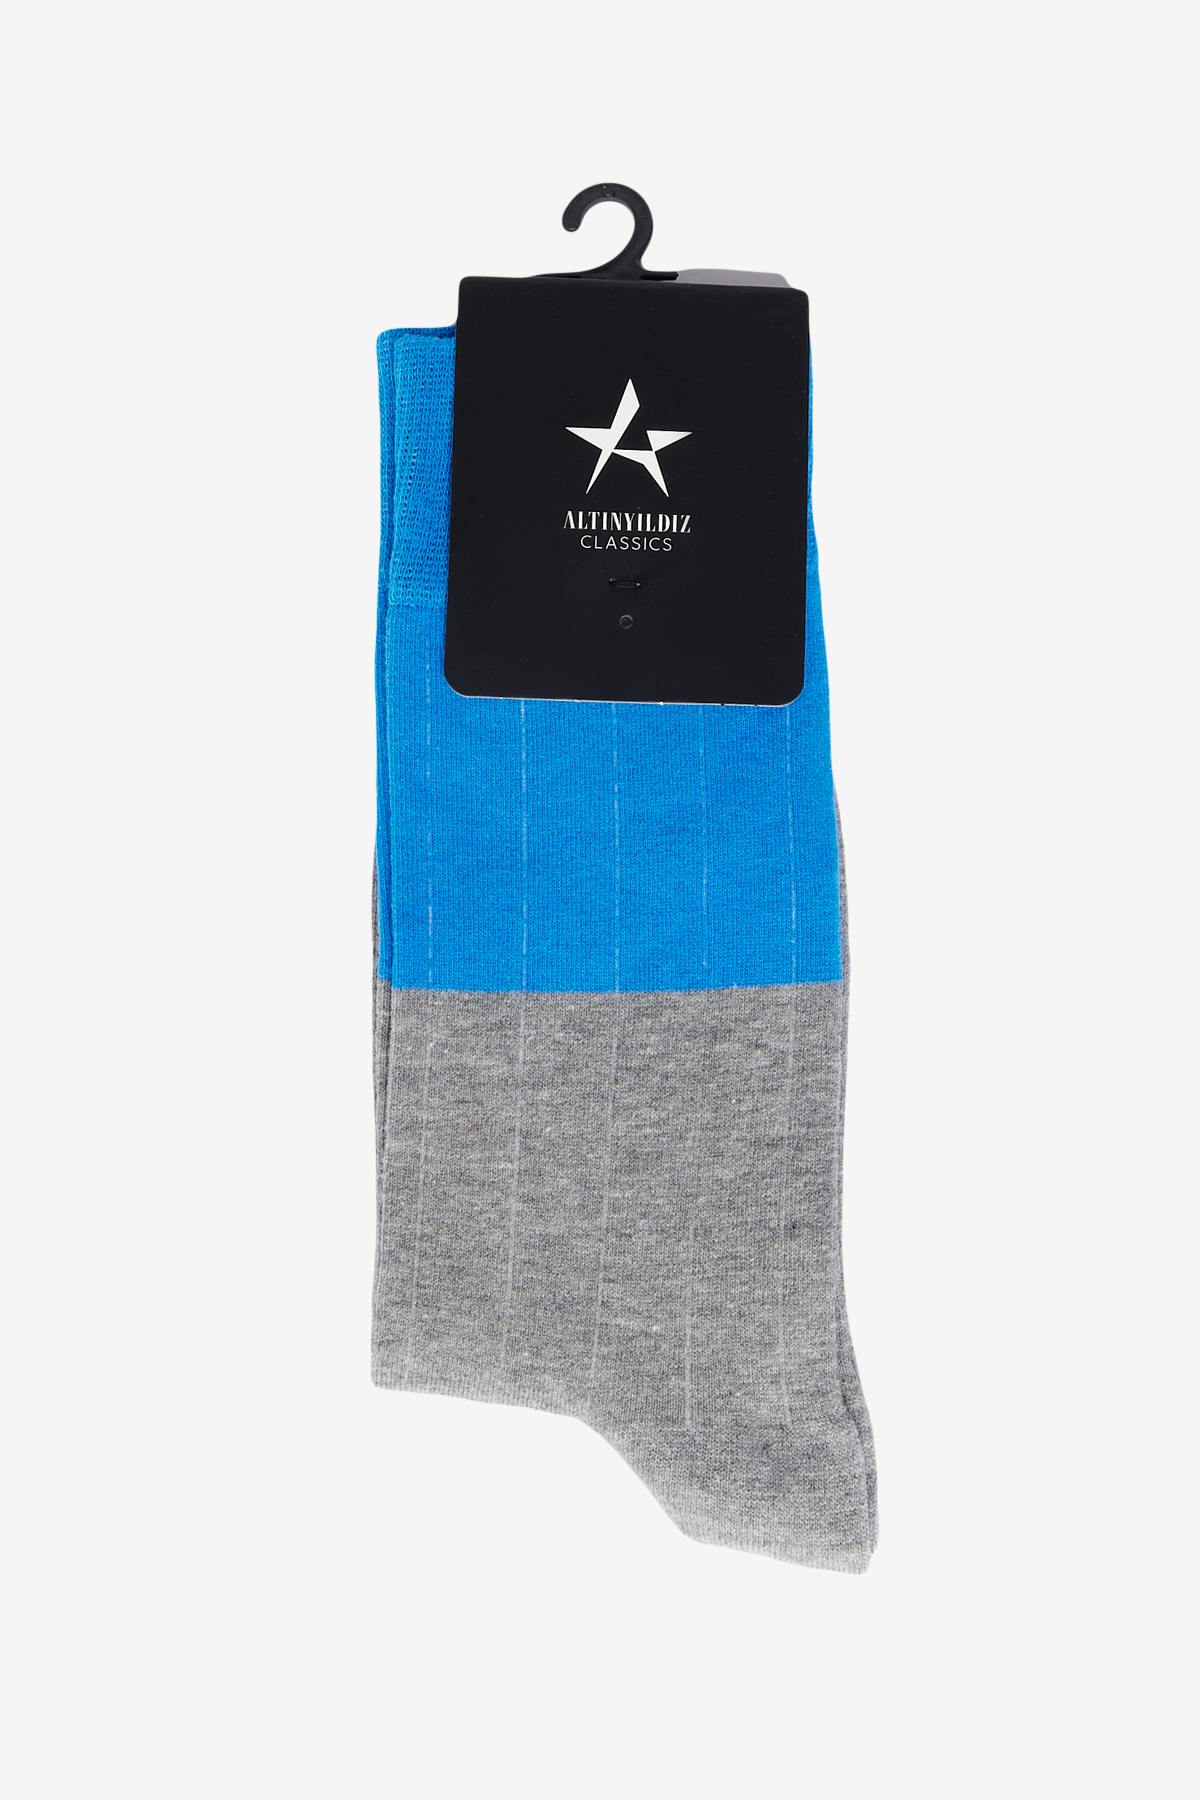 ALTINYILDIZ CLASSICS Men's Blue-Grey Patterned Cleat Socks